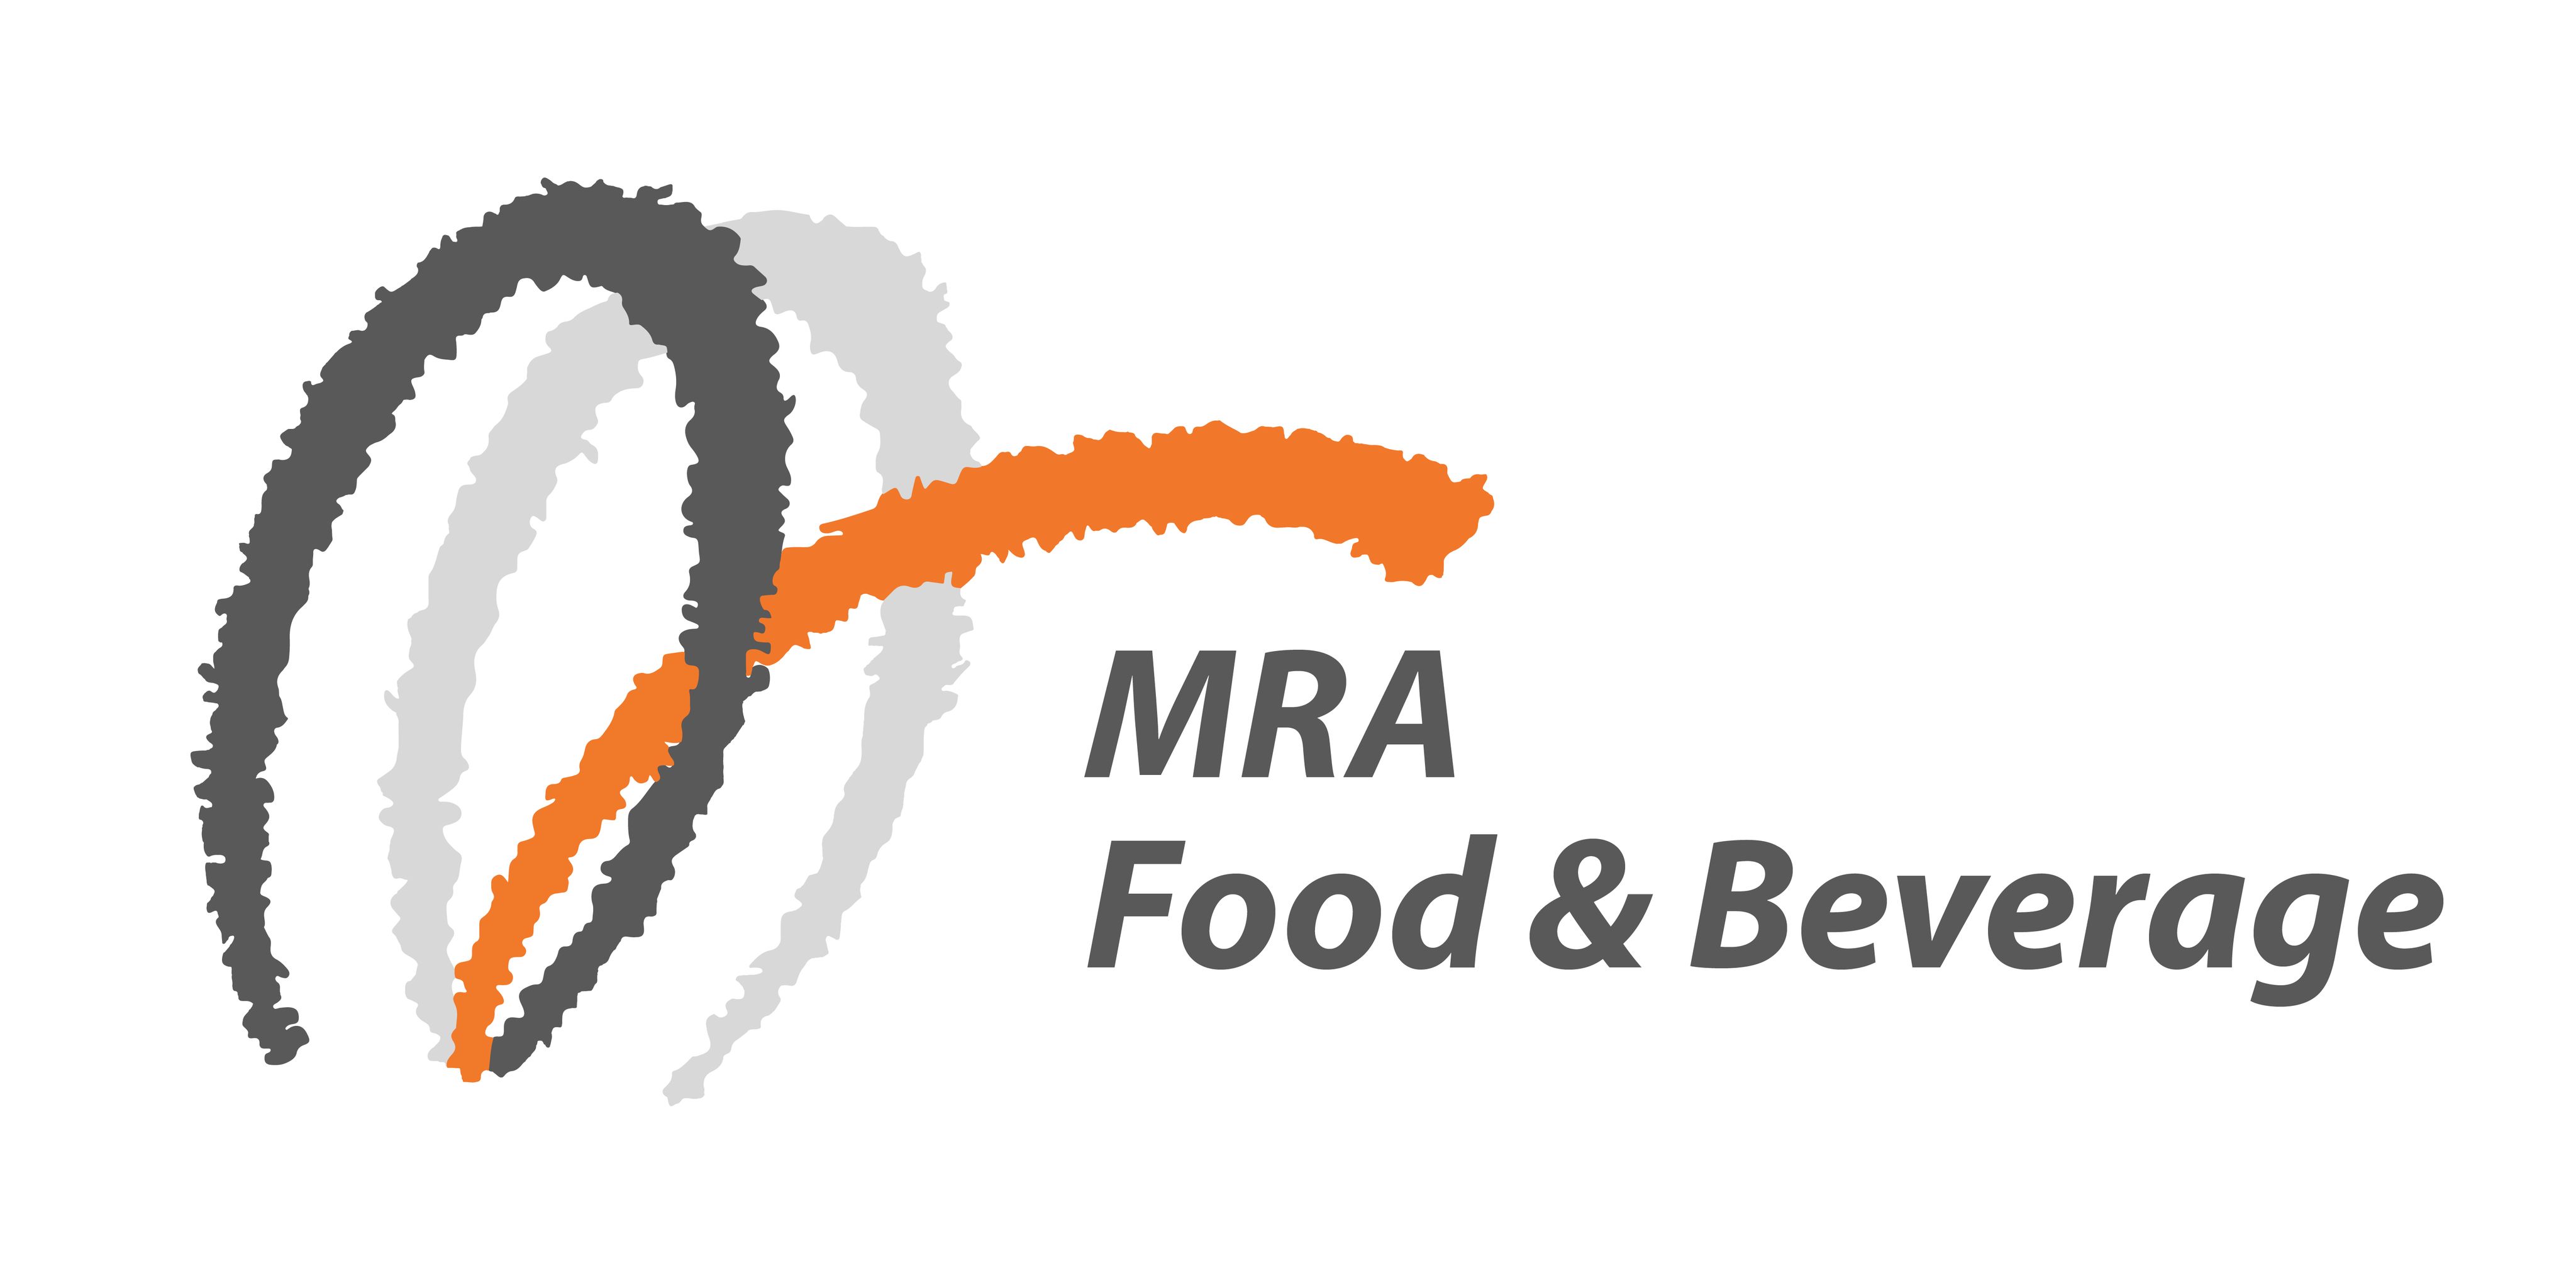 MRA Food & Beverage Division